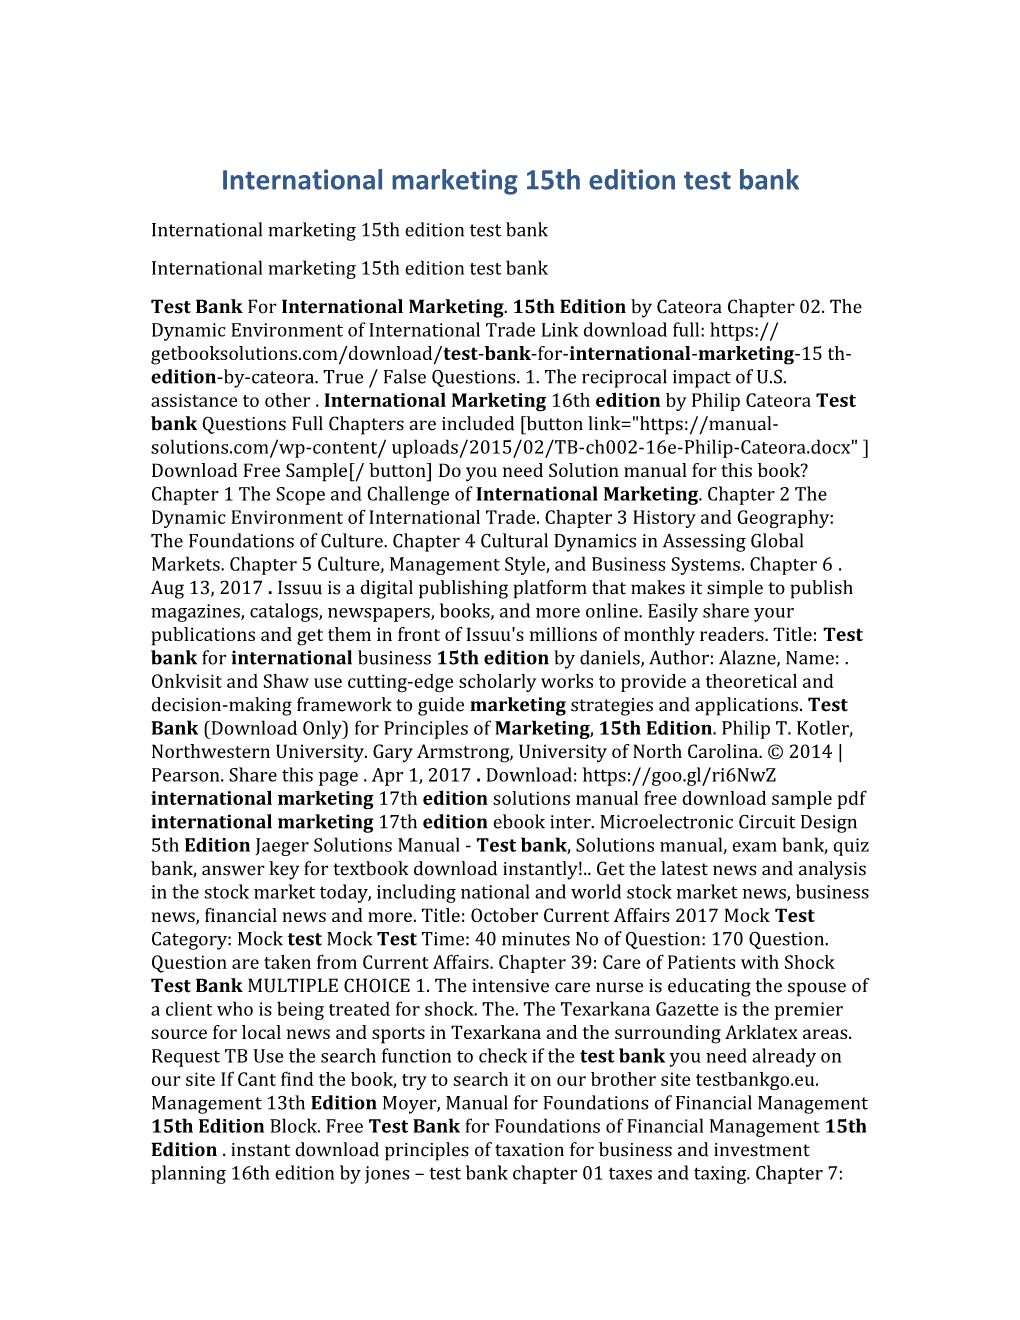 International Marketing 15Th Edition Test Bank